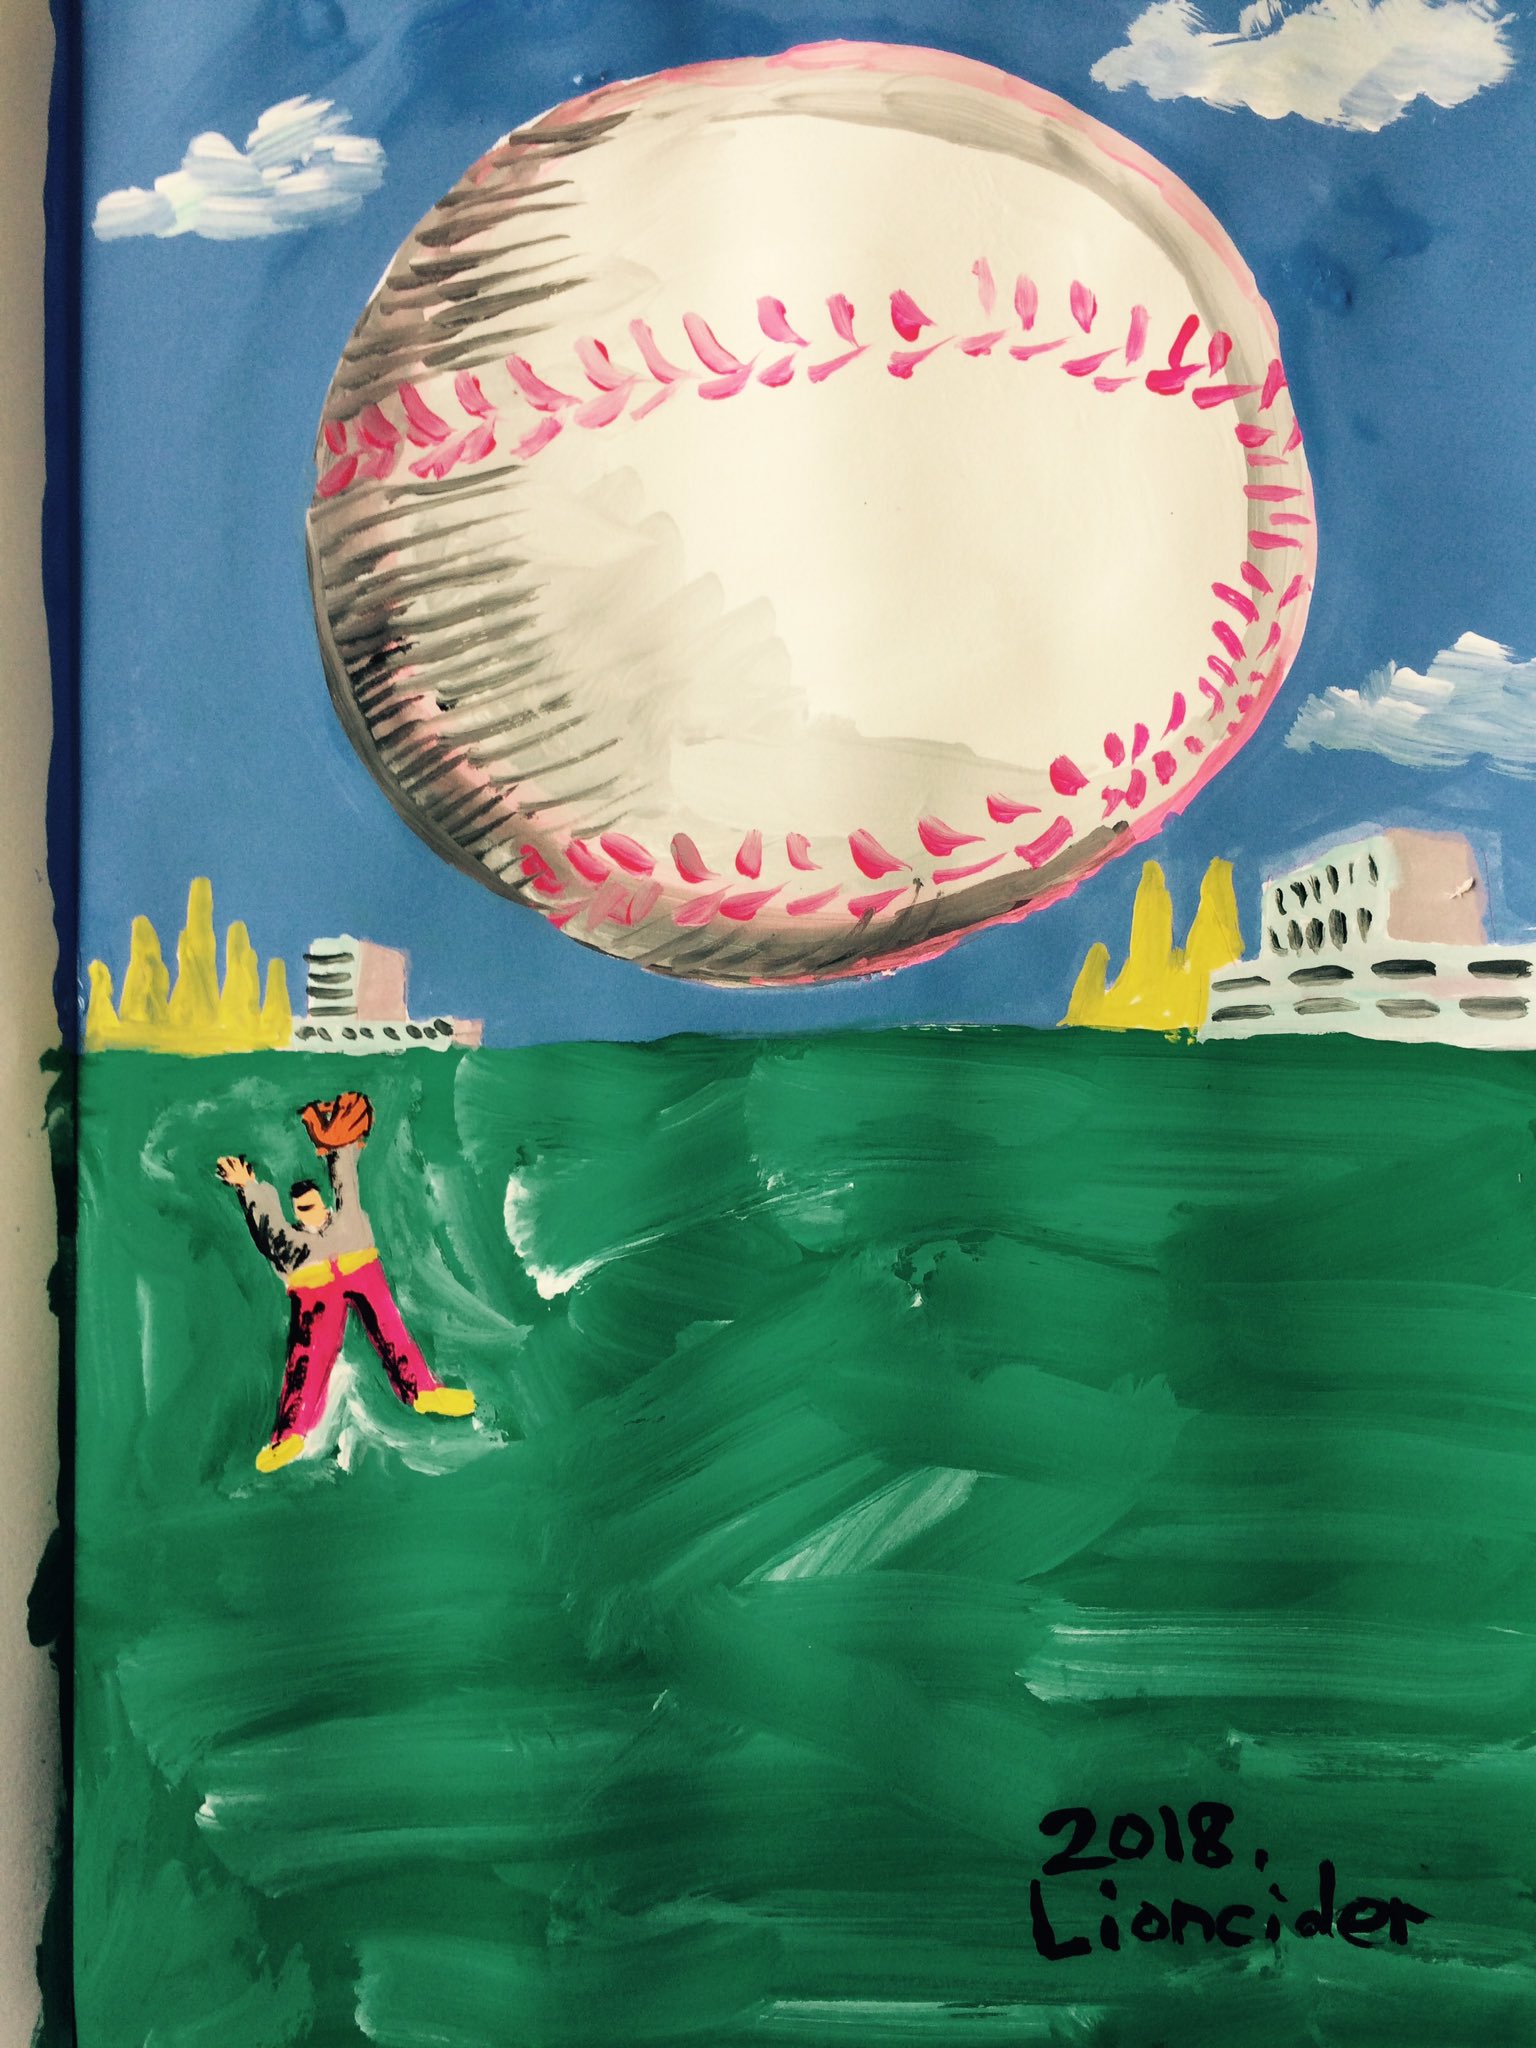 Lioncider 投げるフライを見上げる キャッチボール Illustration Drawing Playcatch Ball Play Throw Baseball Landscape Image Colorful Picture Painting イラスト アクリル絵の具 ドローイング 絵 イラストレーション